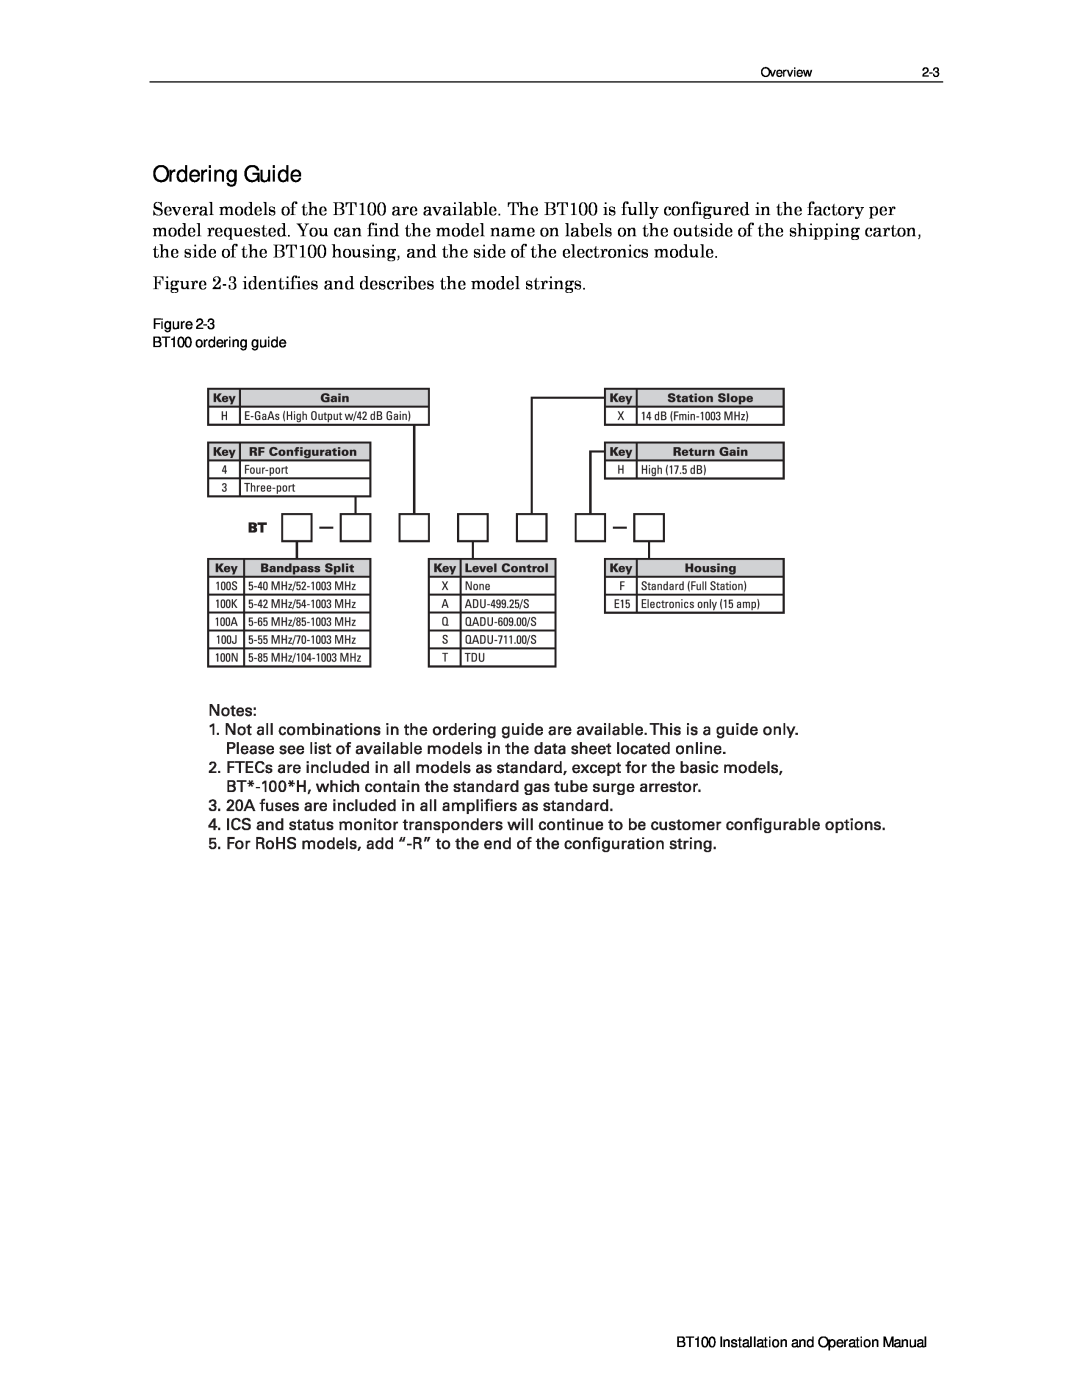 Motorola operation manual Ordering Guide, Figure BT100 ordering guide 